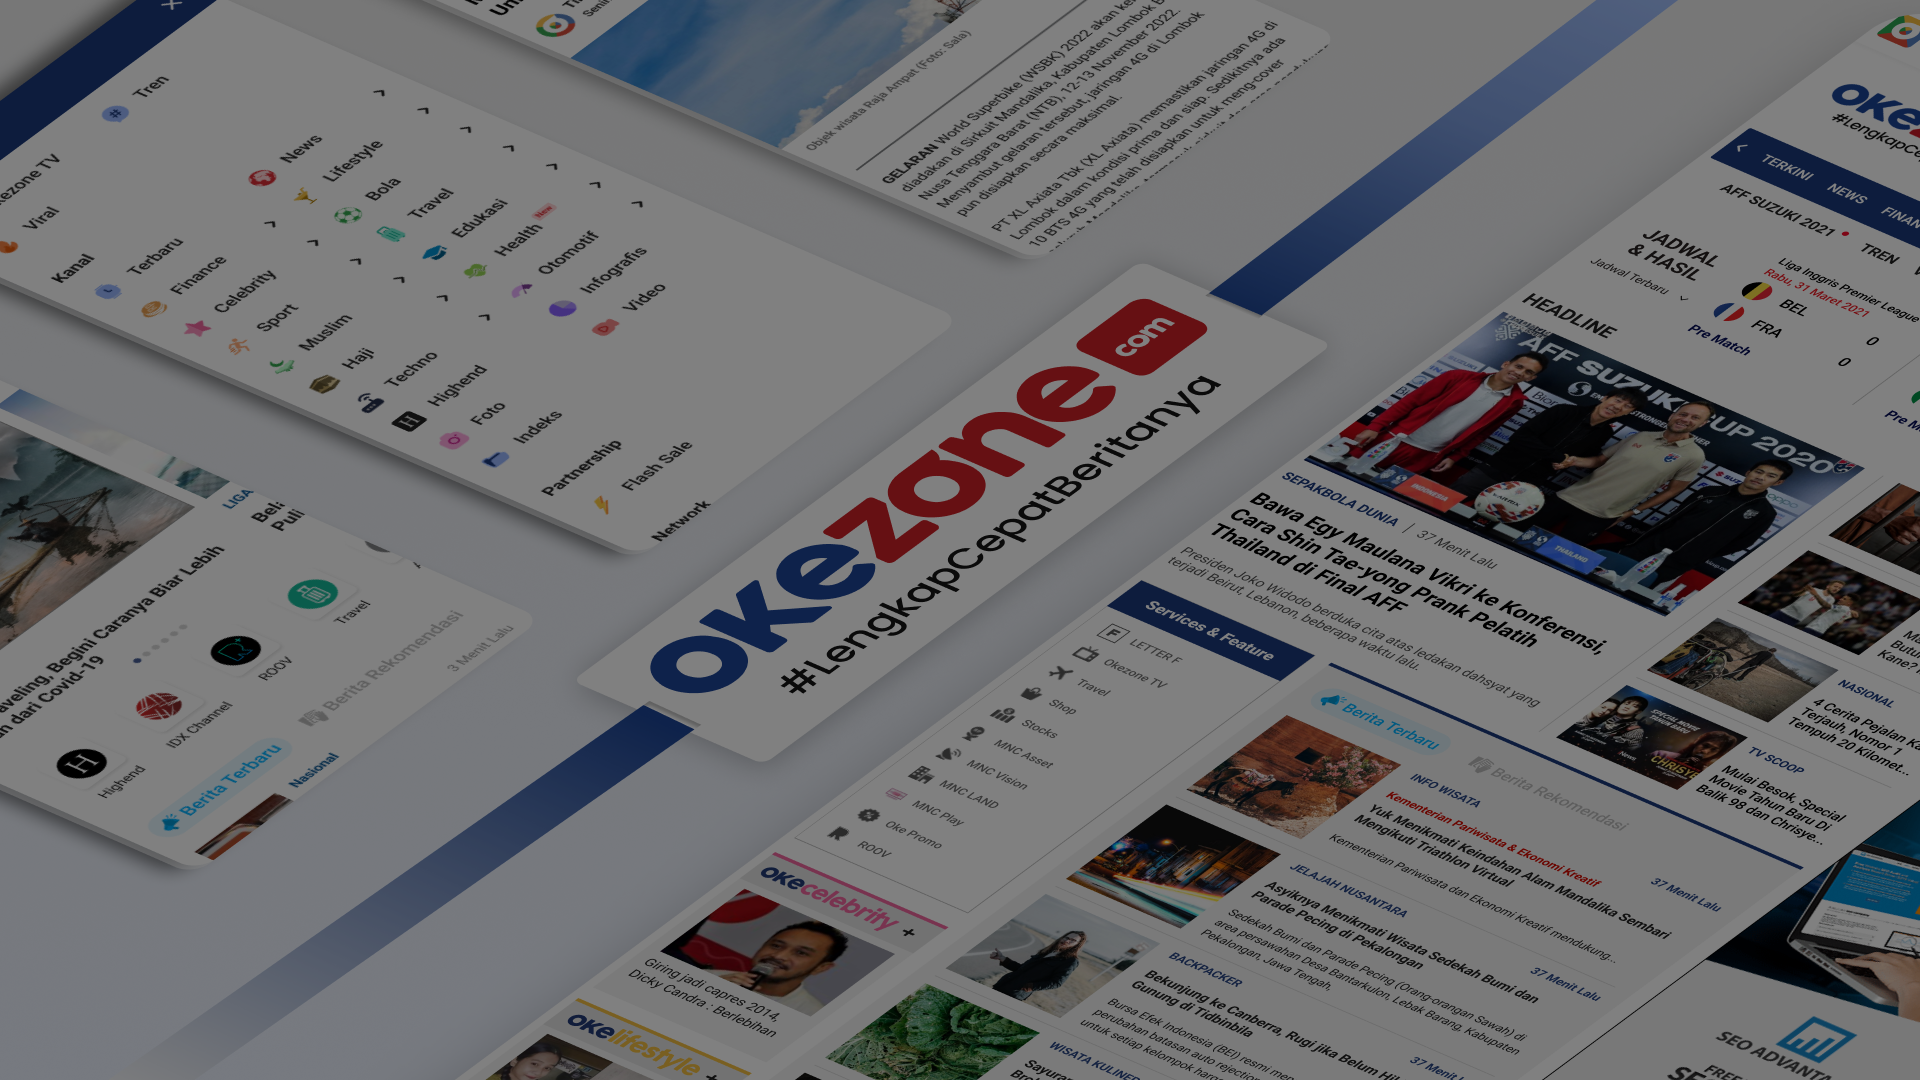 okezone.com